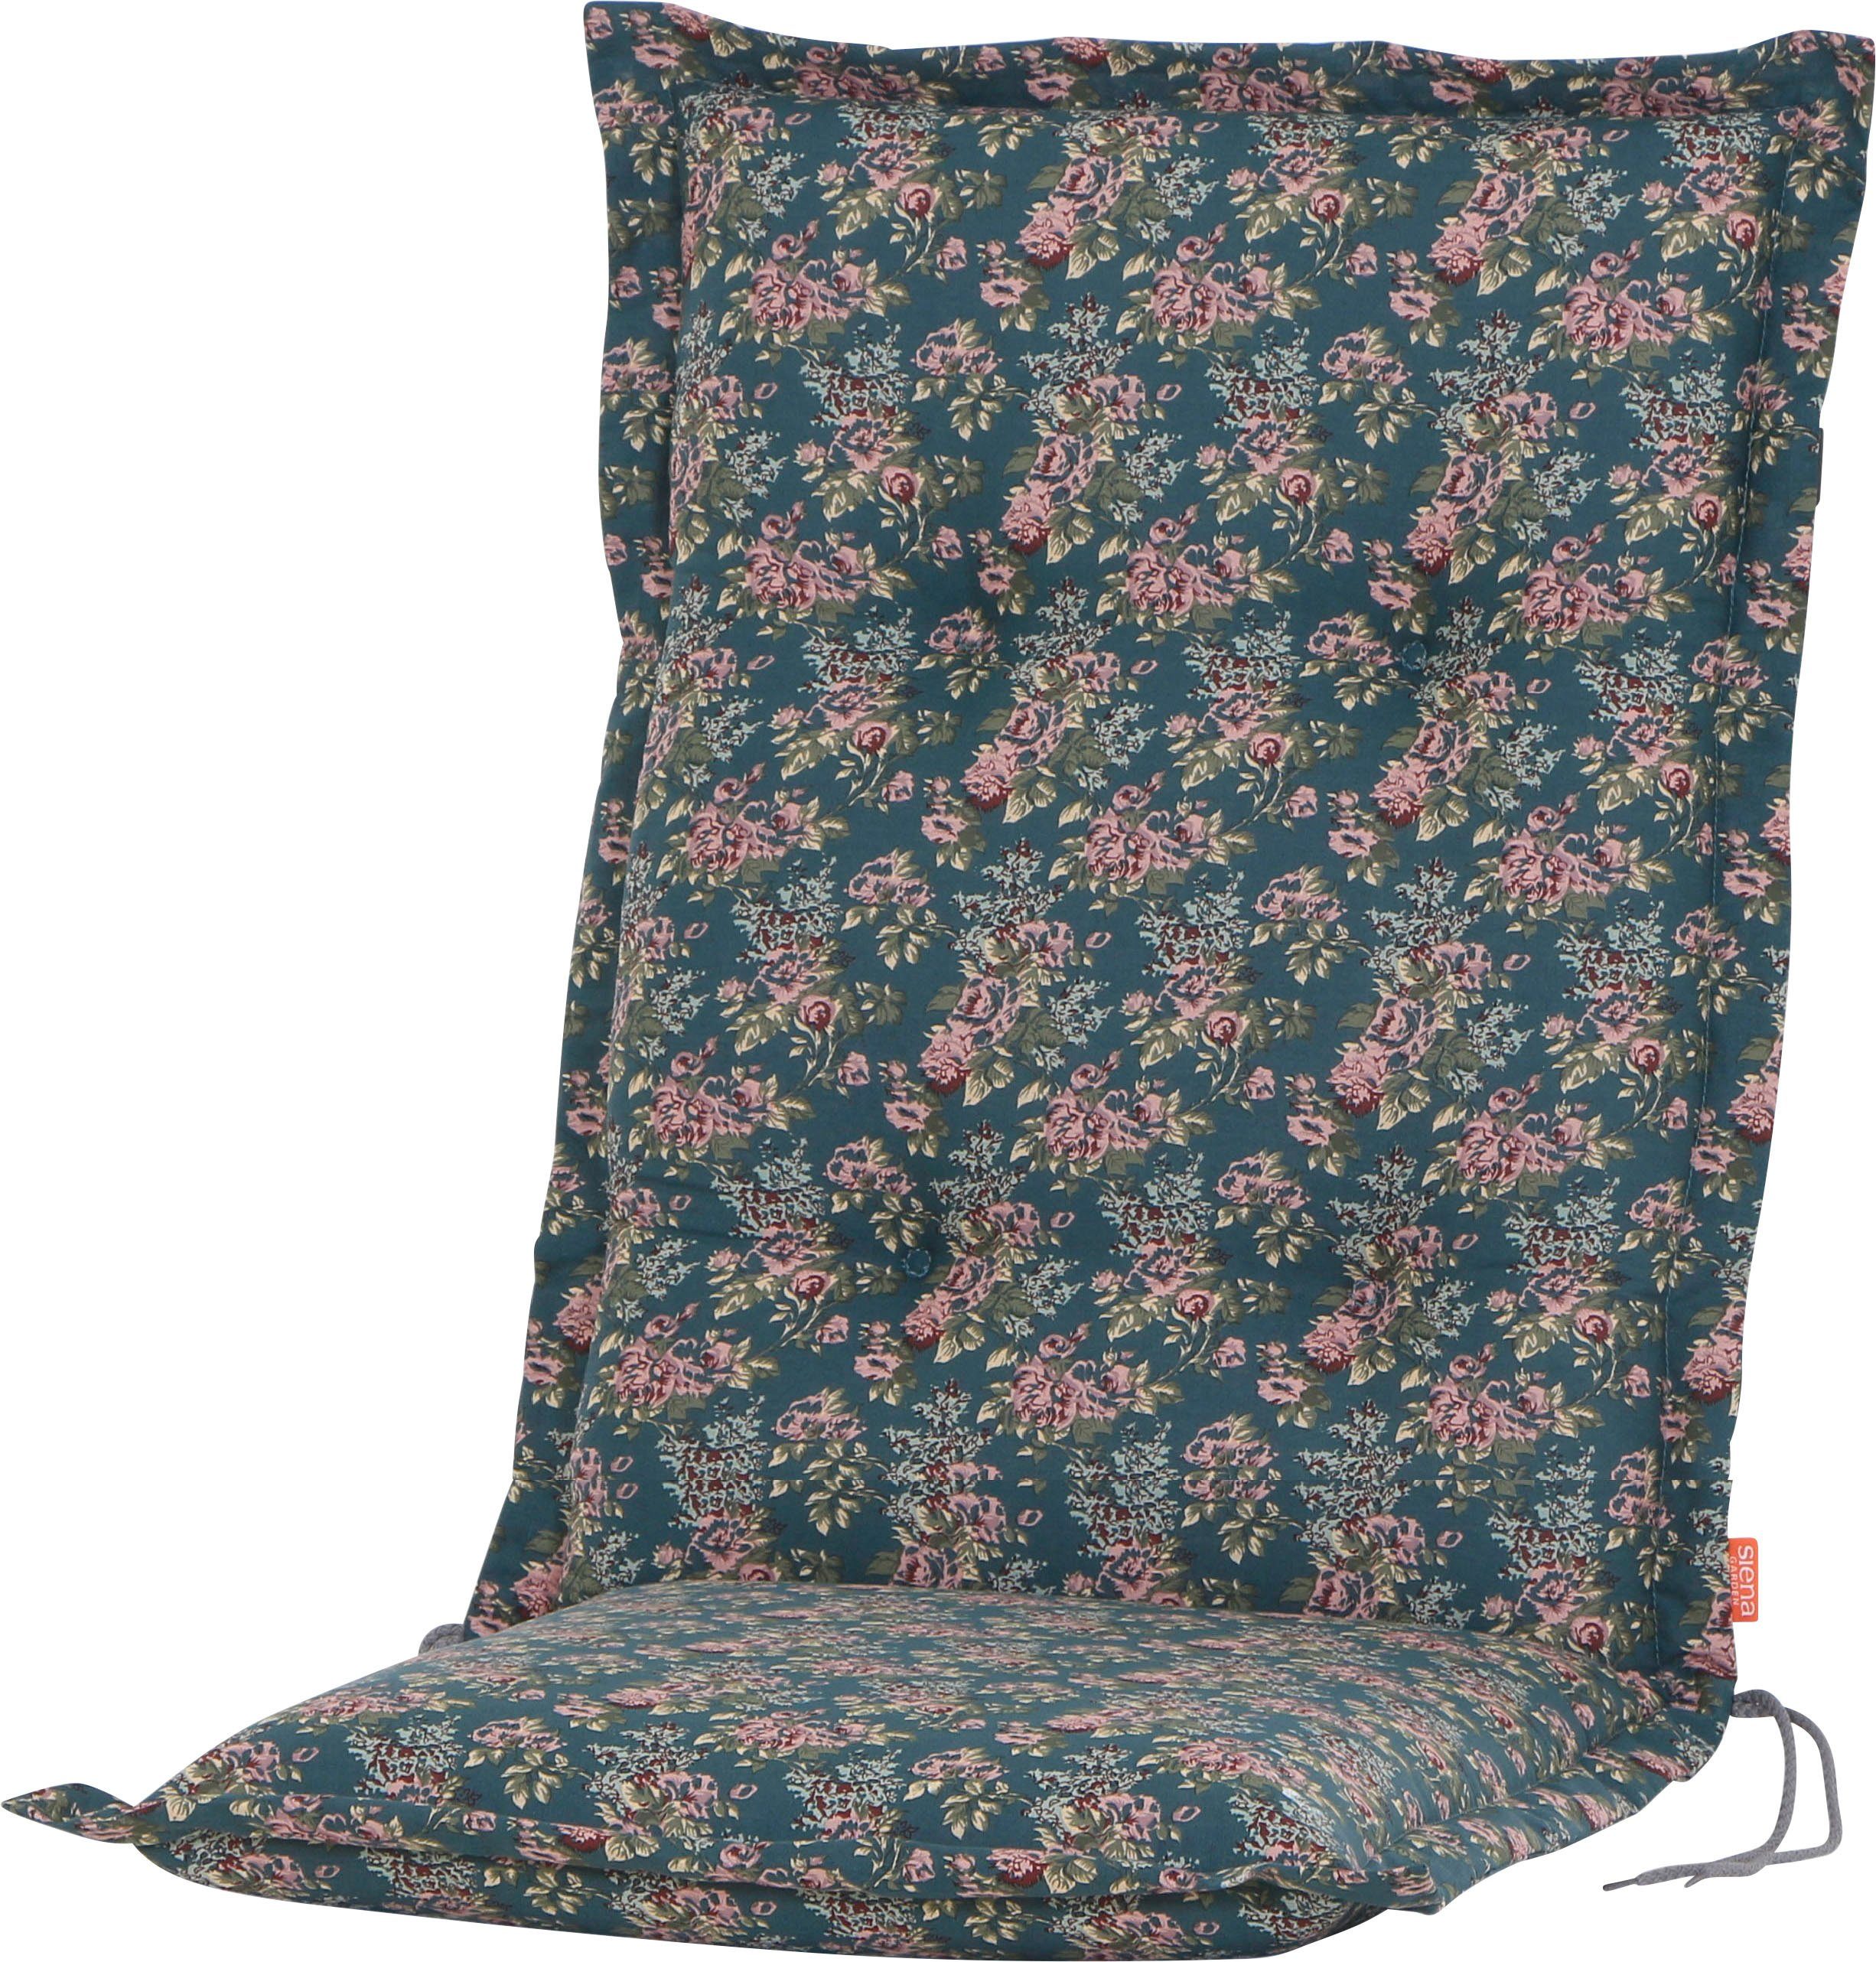 Siena Garden Sesselauflage Xora, ca. 110x48x8 cm, Passend zu Stapelsesseln